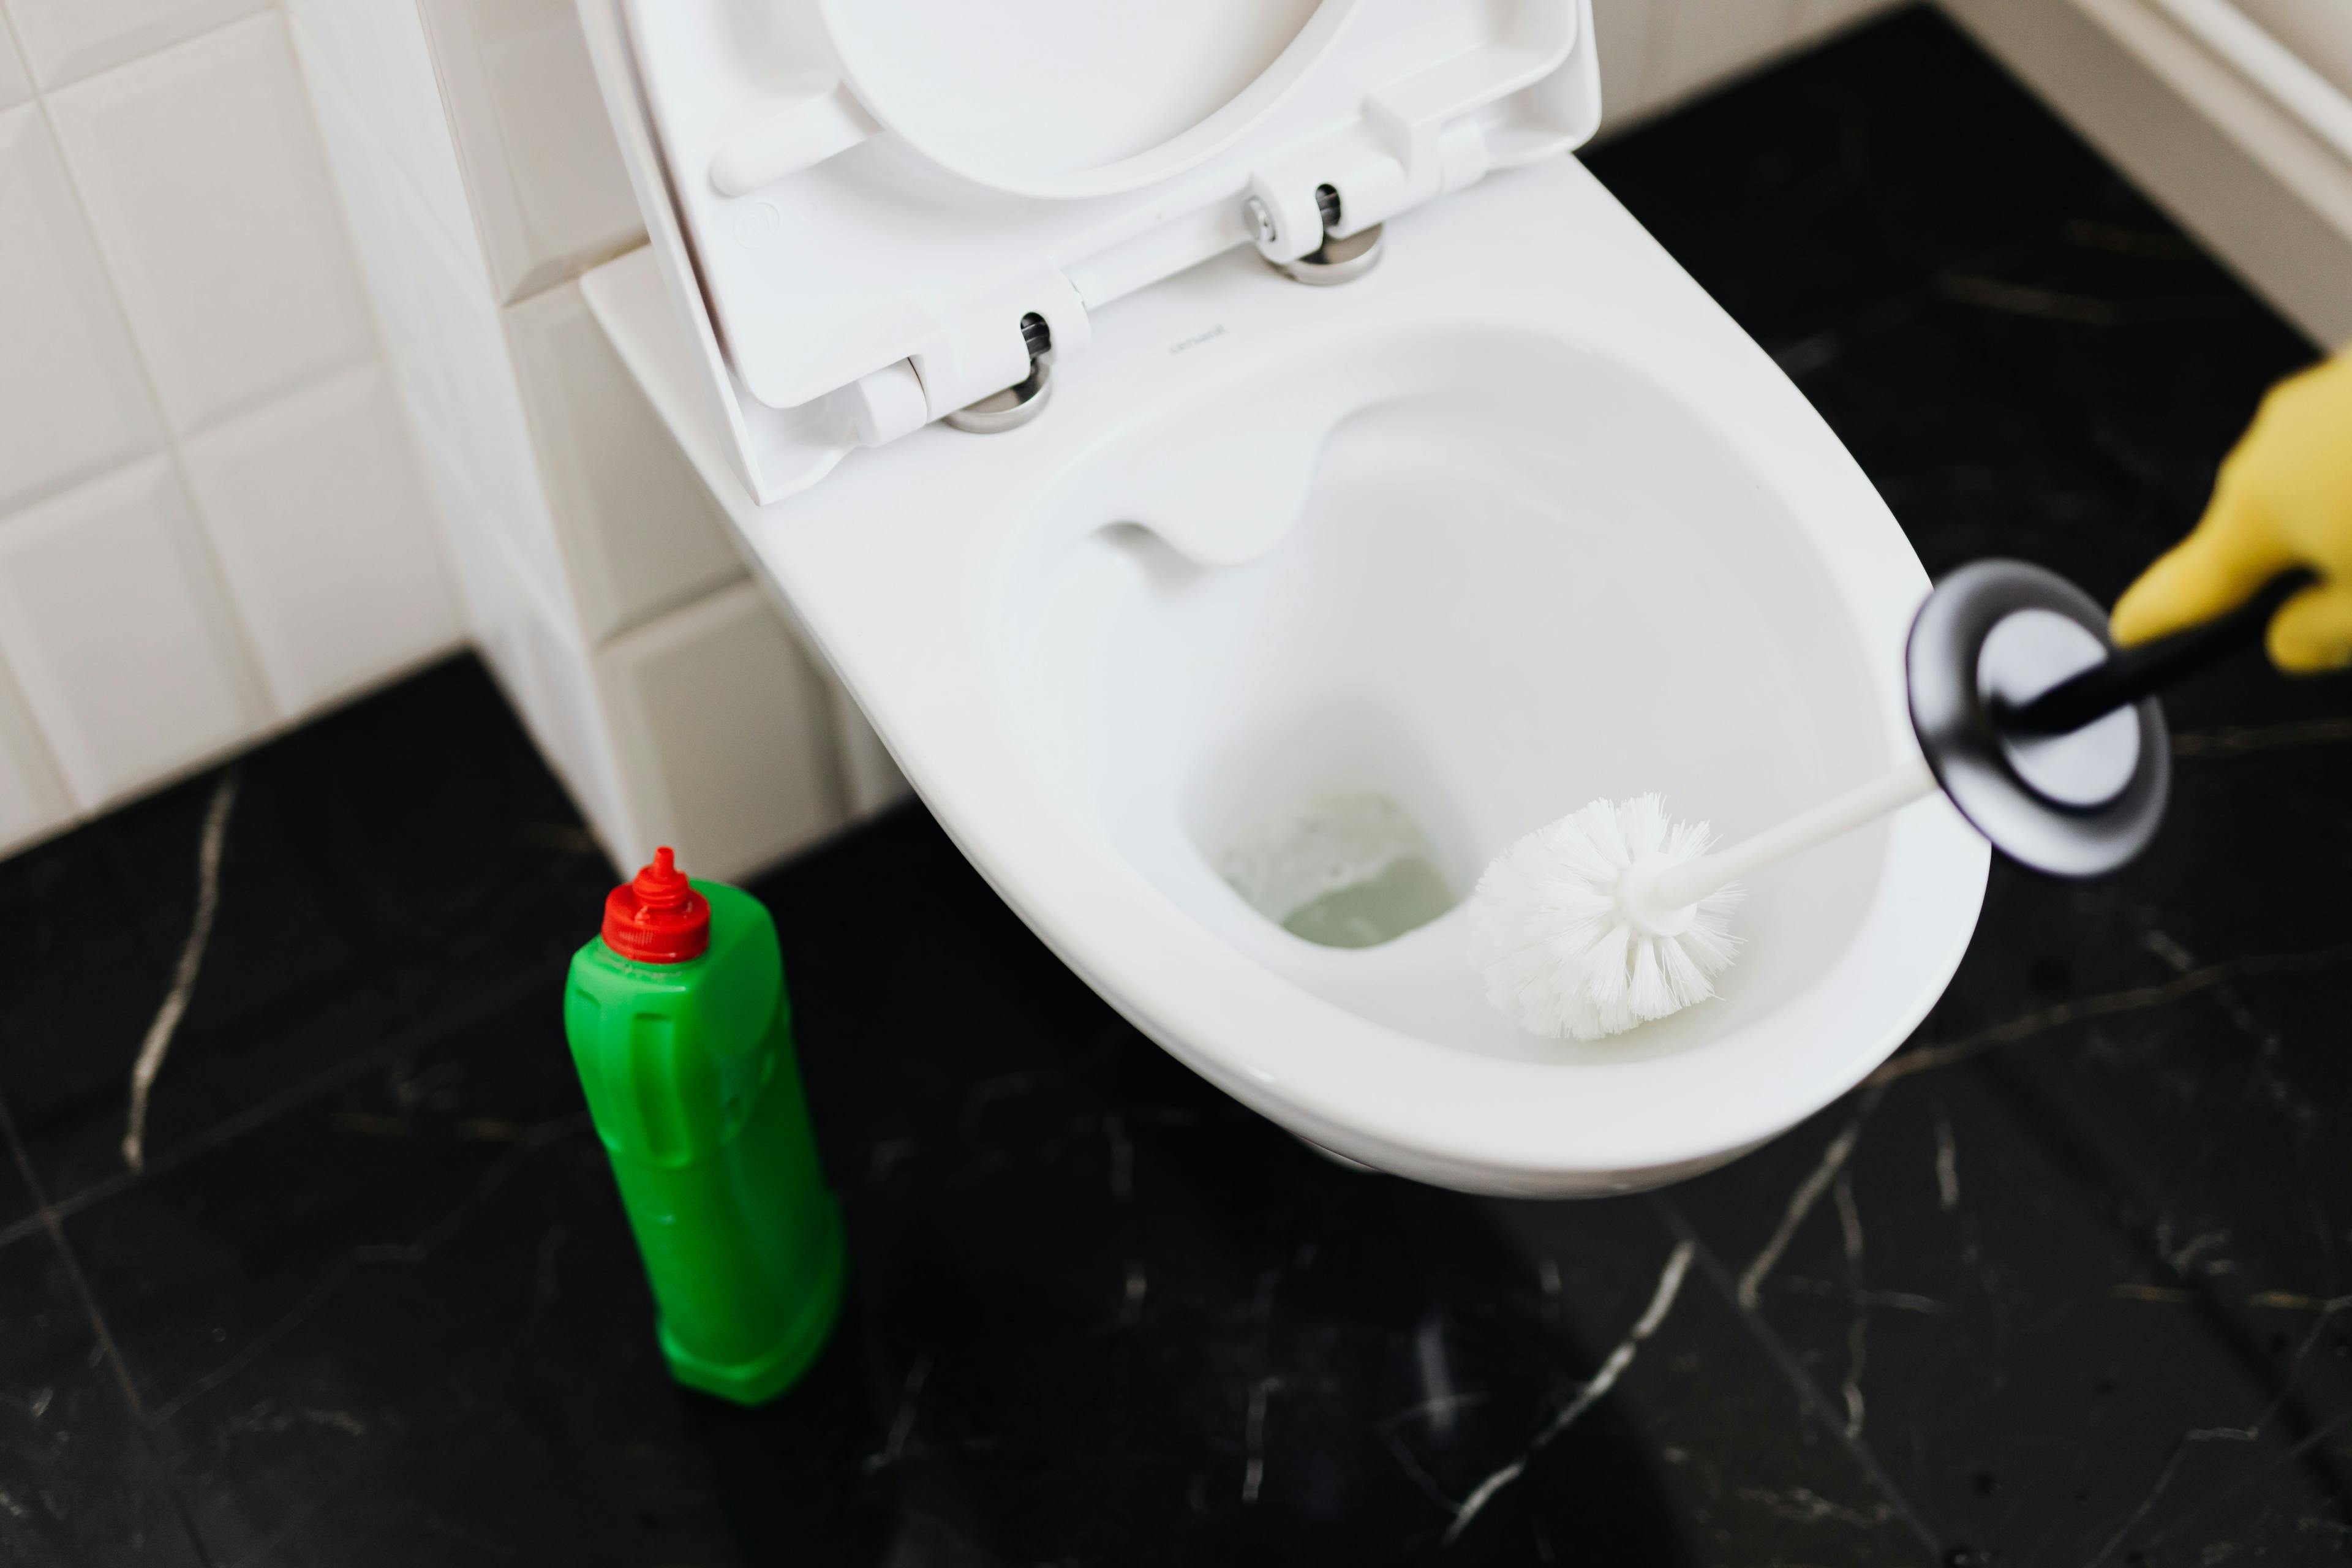 Helper cleaning toilet - StringsSG